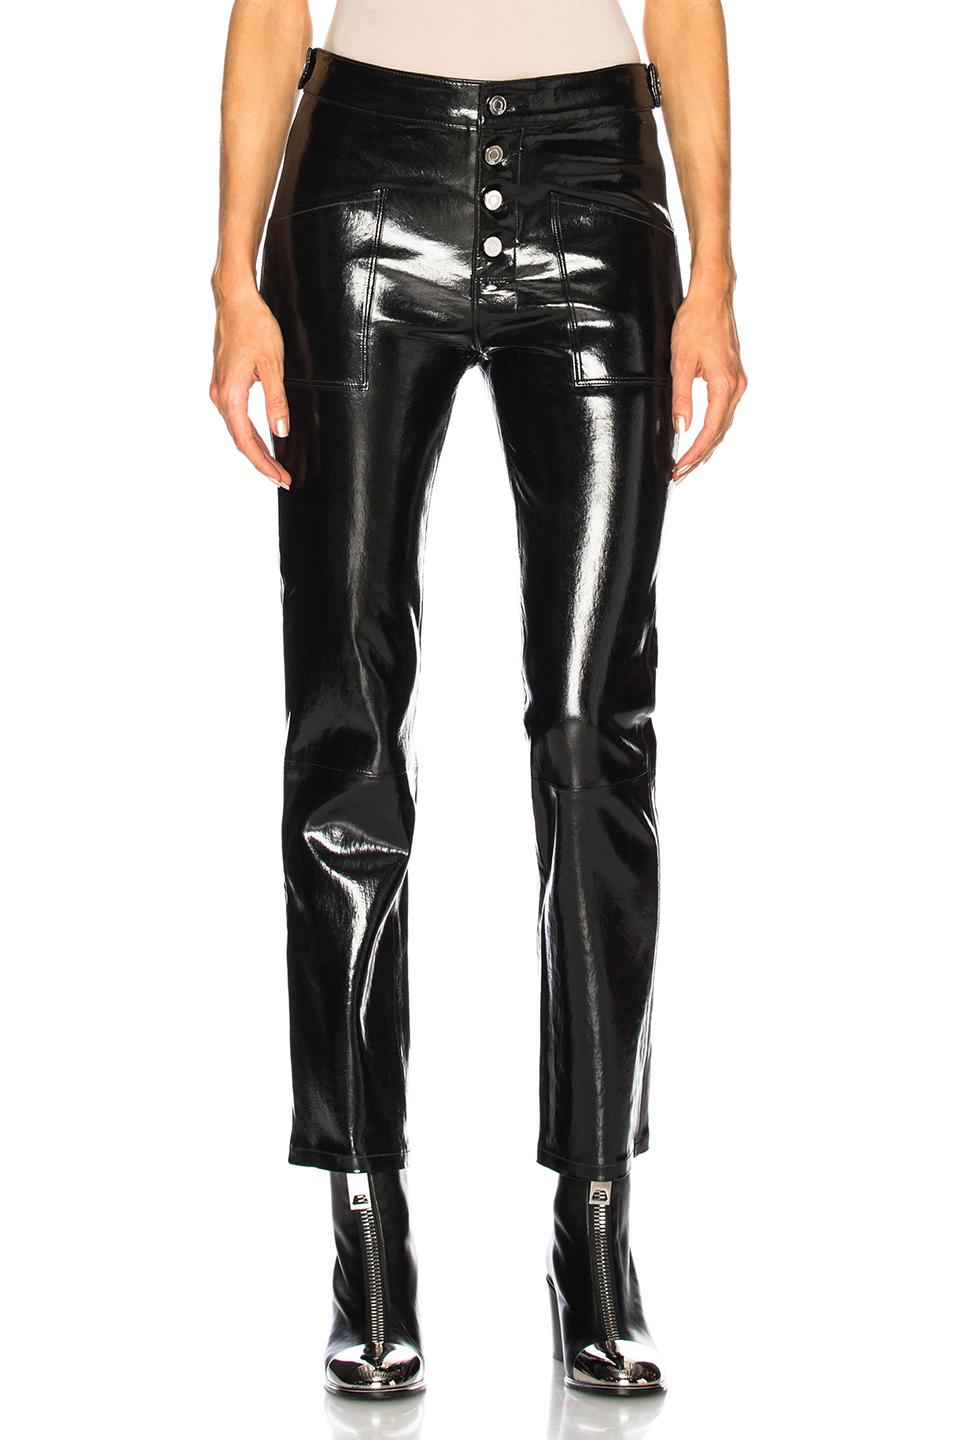 Lyst - Rta Theadora Patent Leather Pants in Black